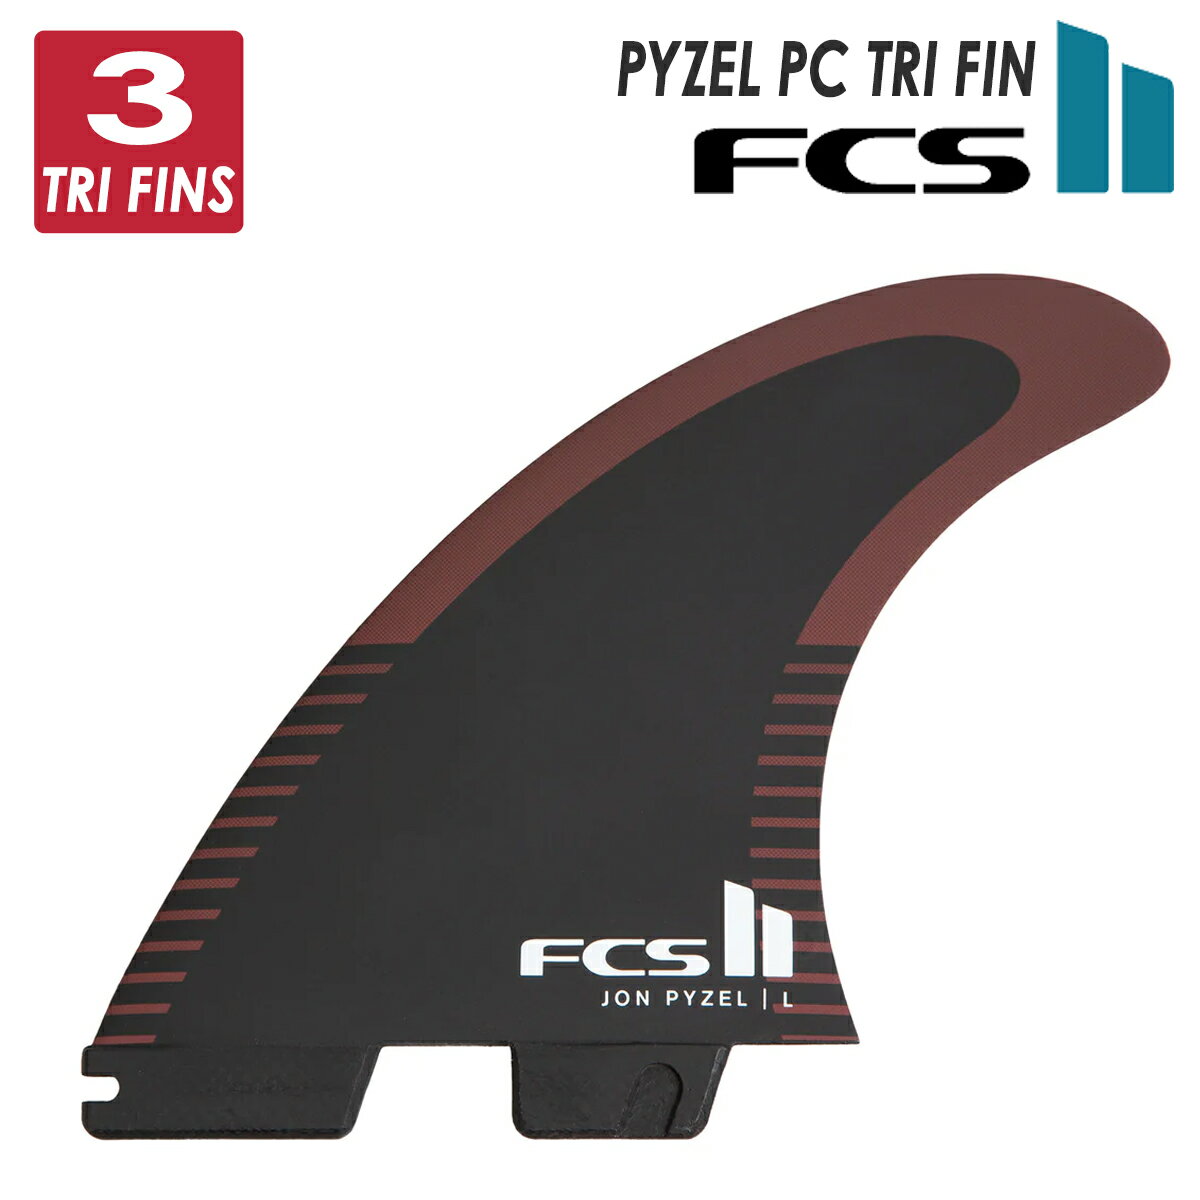 24 FCS2 フィン JP PYZEL PC TRI FIN SET ジョン・パイゼル トライフィン スラスター パフォーマンスコア 3フィン 3本セット FCSII 日本正規品 1